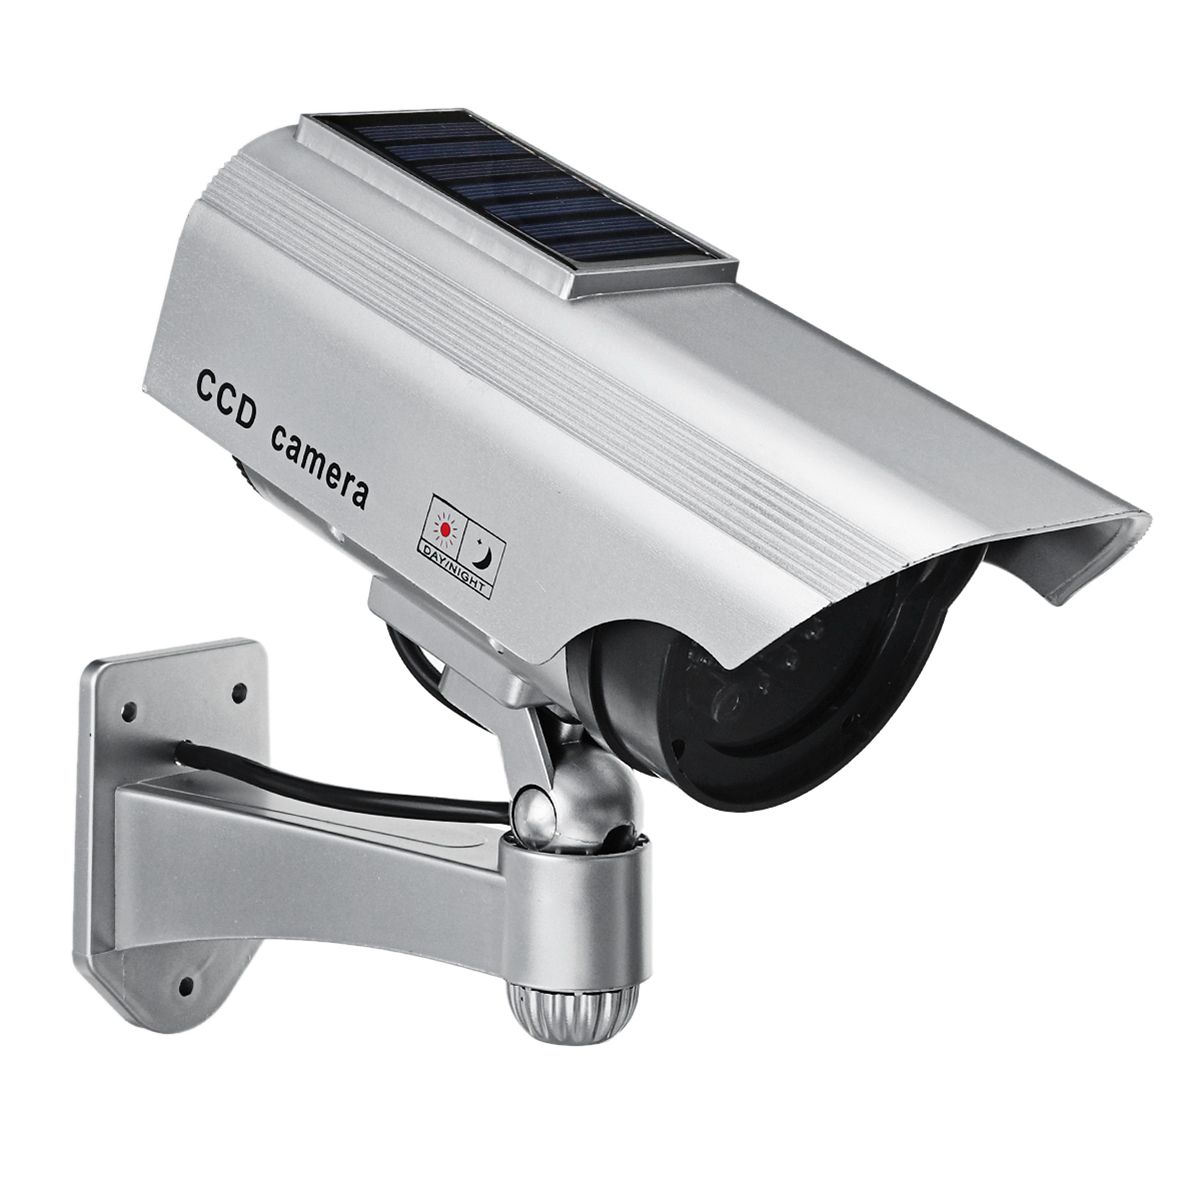 Solar-Power-Fake-Camera-CCTV-Realistic-Flashing-IR-Dummy-Security-Camera-Blinking-1365678